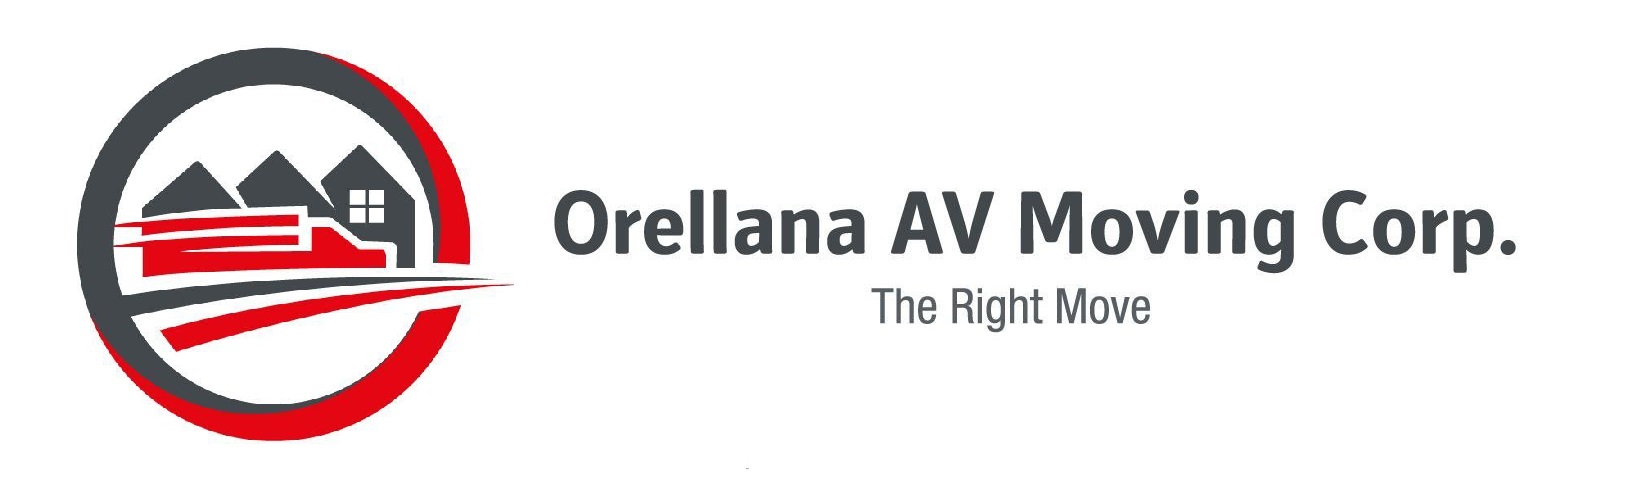 Orellana AV Moving Corp